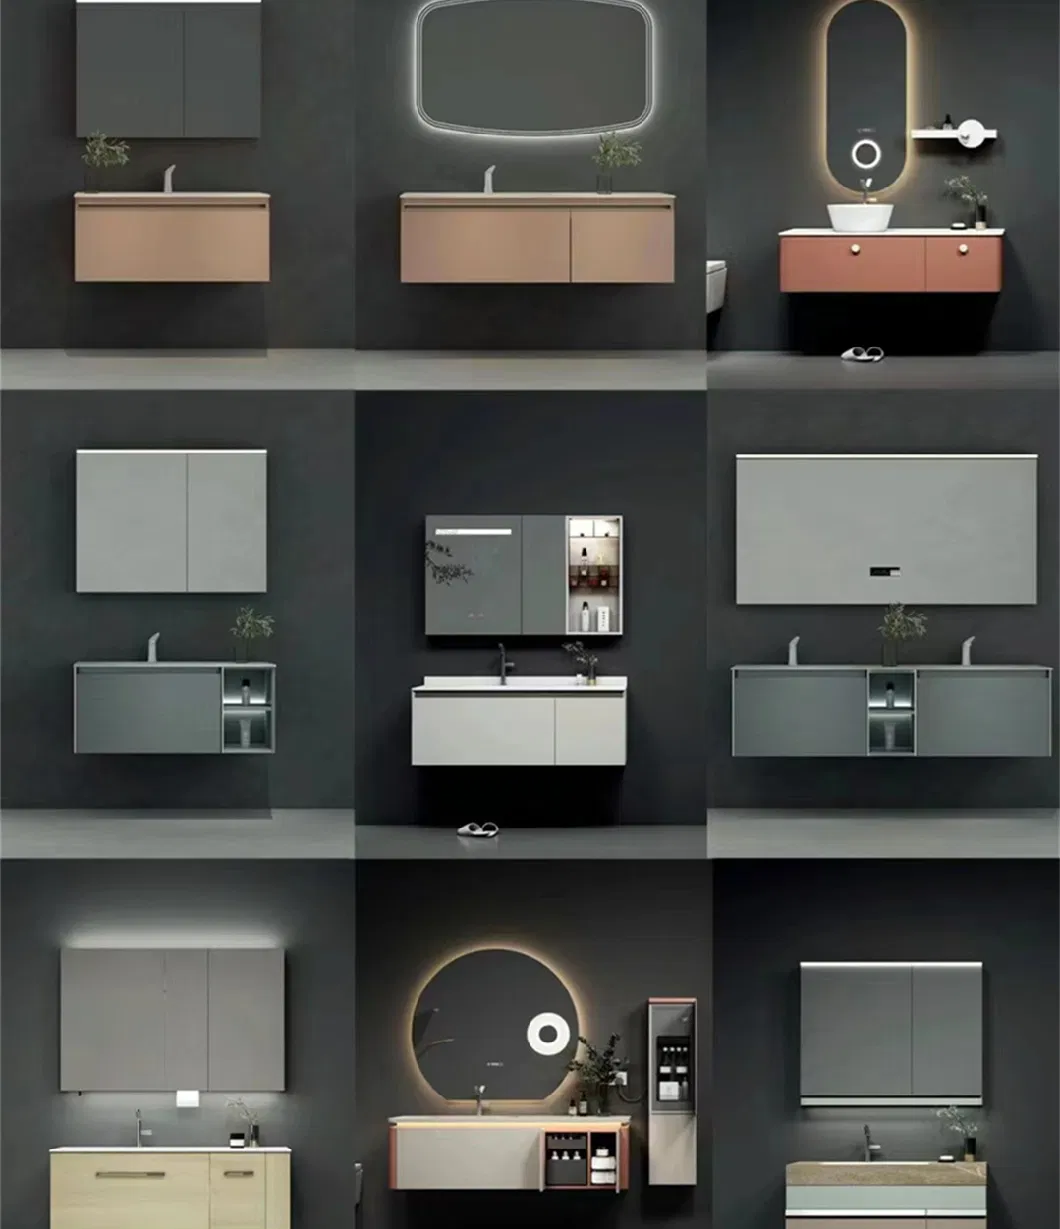 Customize Modern Style Simple Design Luxury Storage Smart Bathroom Cabinet